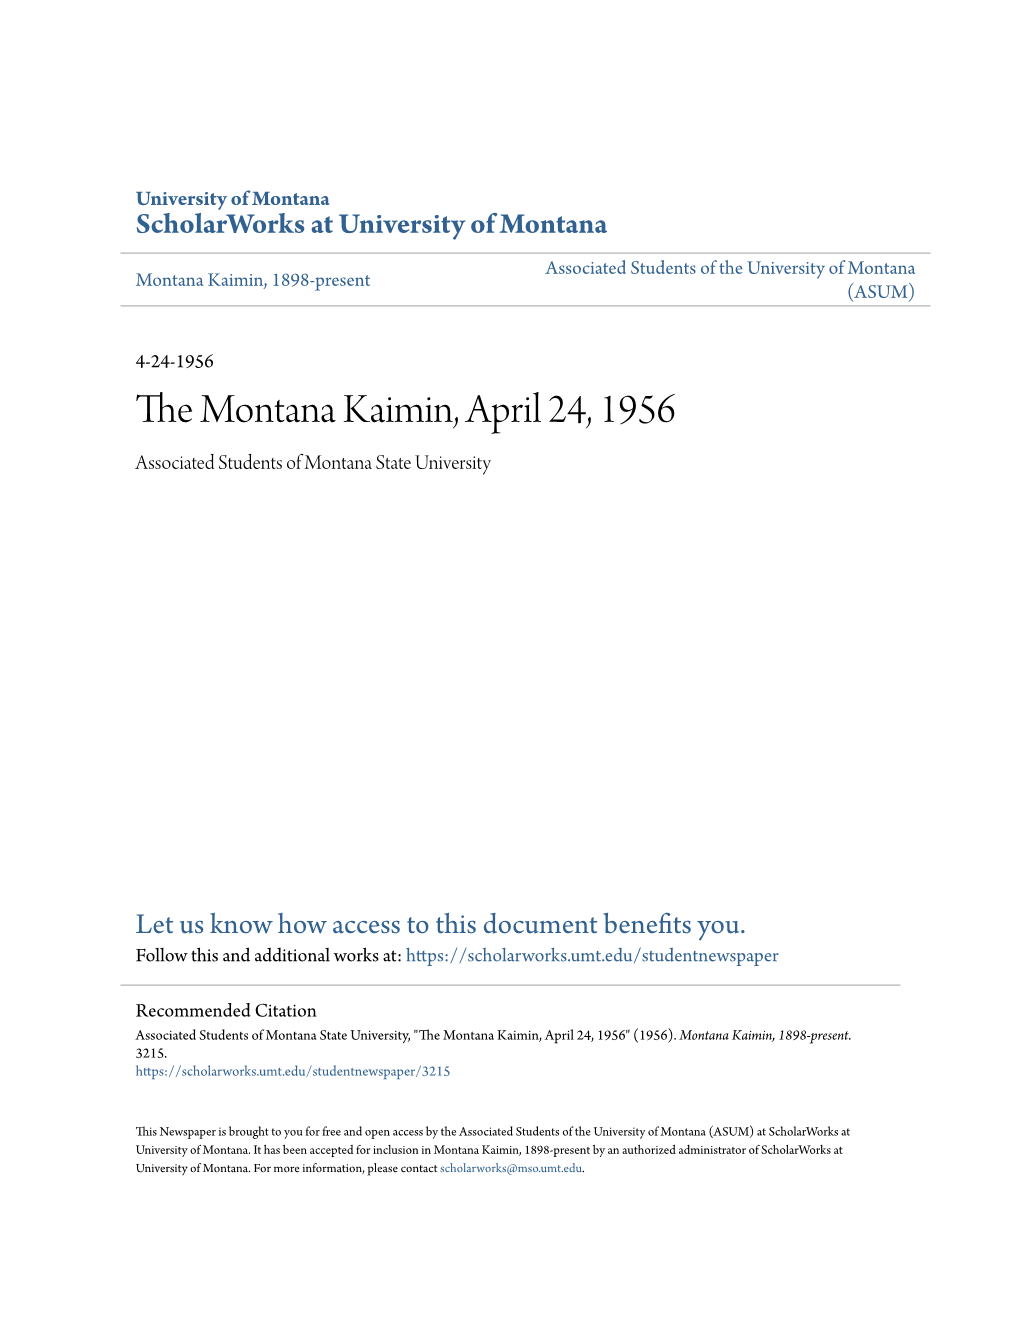 The Montana Kaimin, April 24, 1956